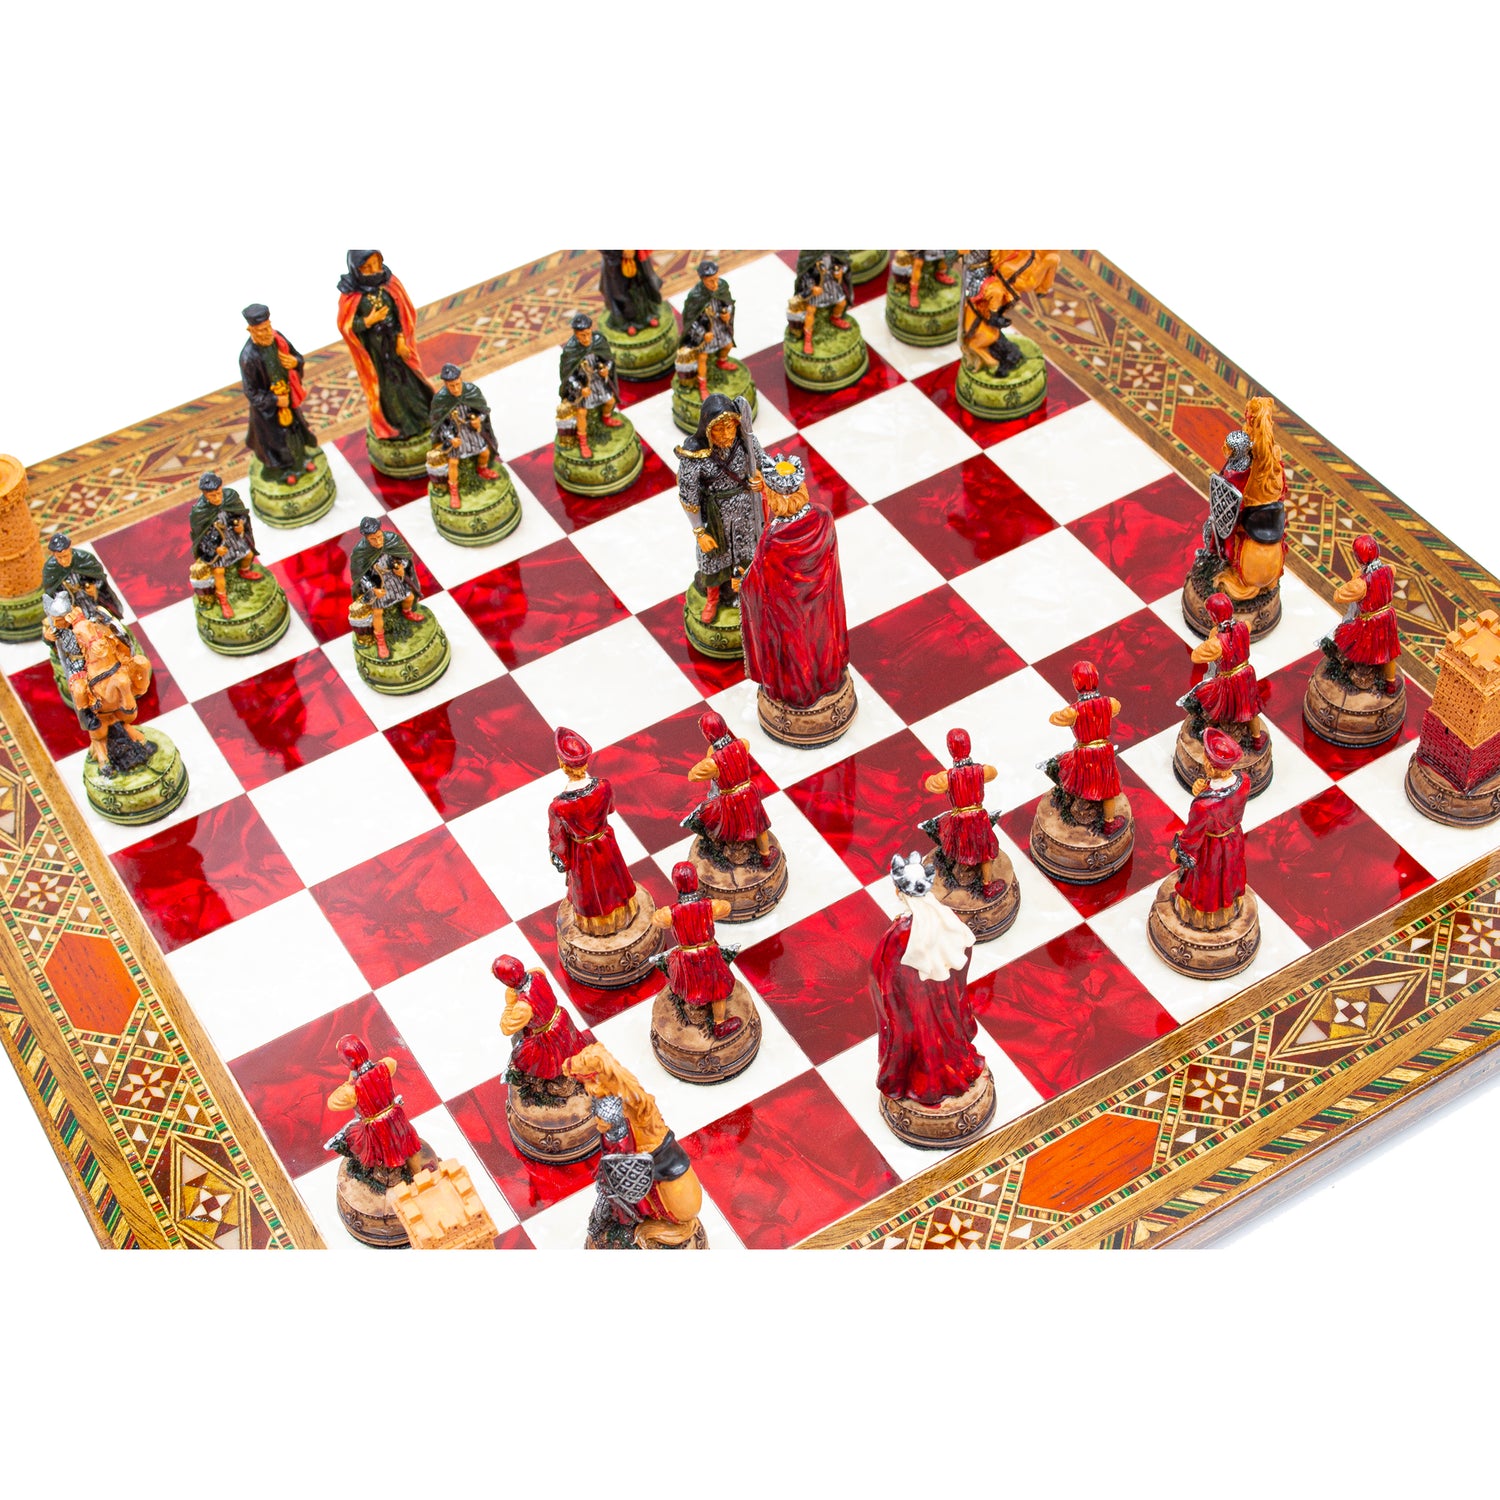 Camelot Saga Chess Set: Hand-Painted on Mosaic - Ketohandcraft